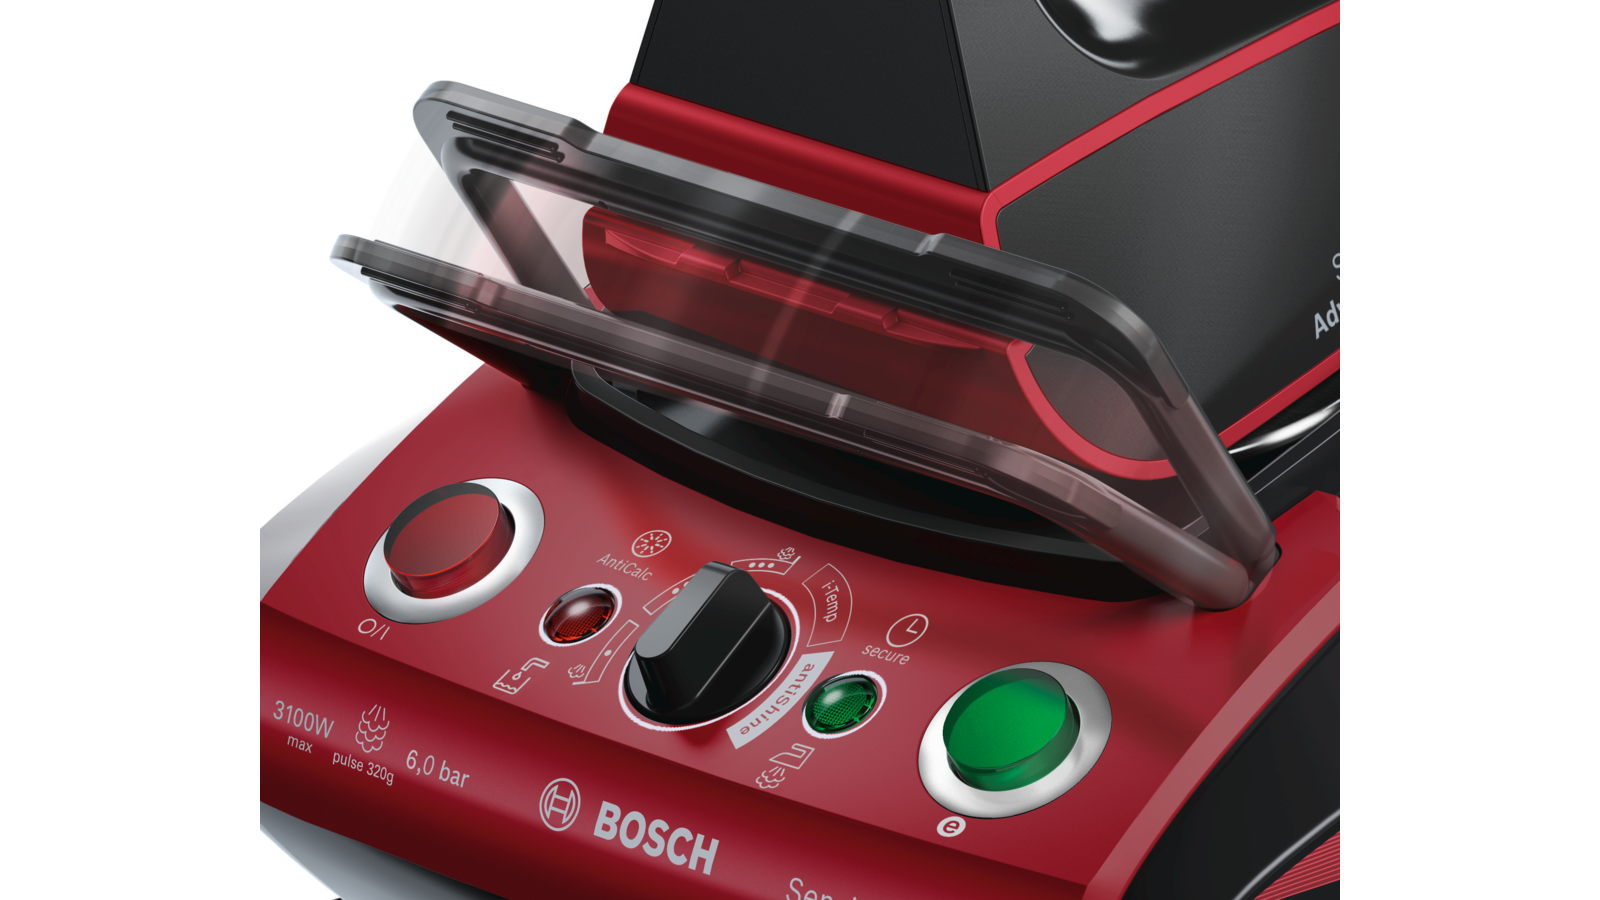 Bosch sensixx advanced steam как чистить от накипи фото 93